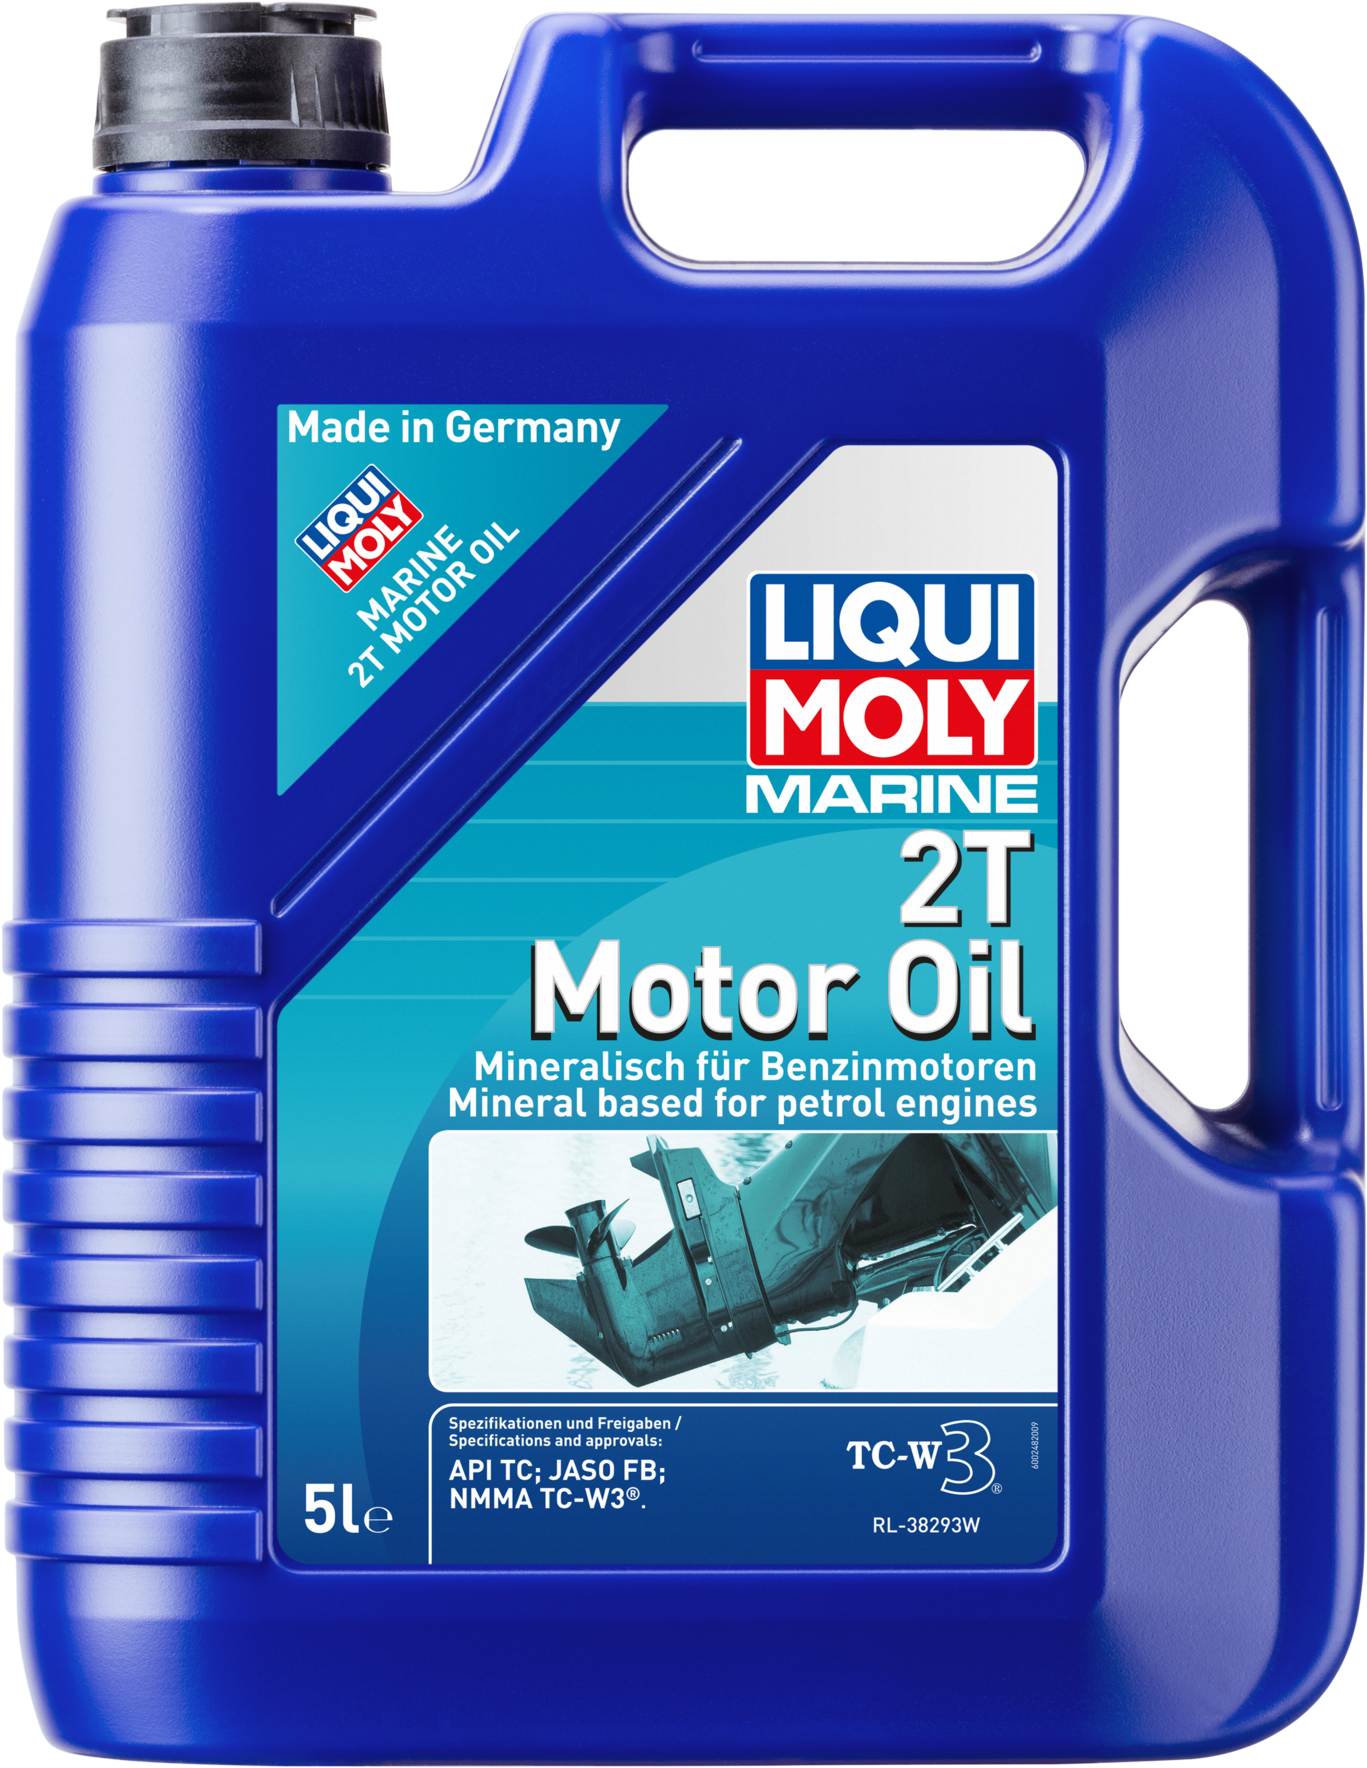 Liqui Moly Marine 2T Motor Oil, 4 x 5 lt detail 2